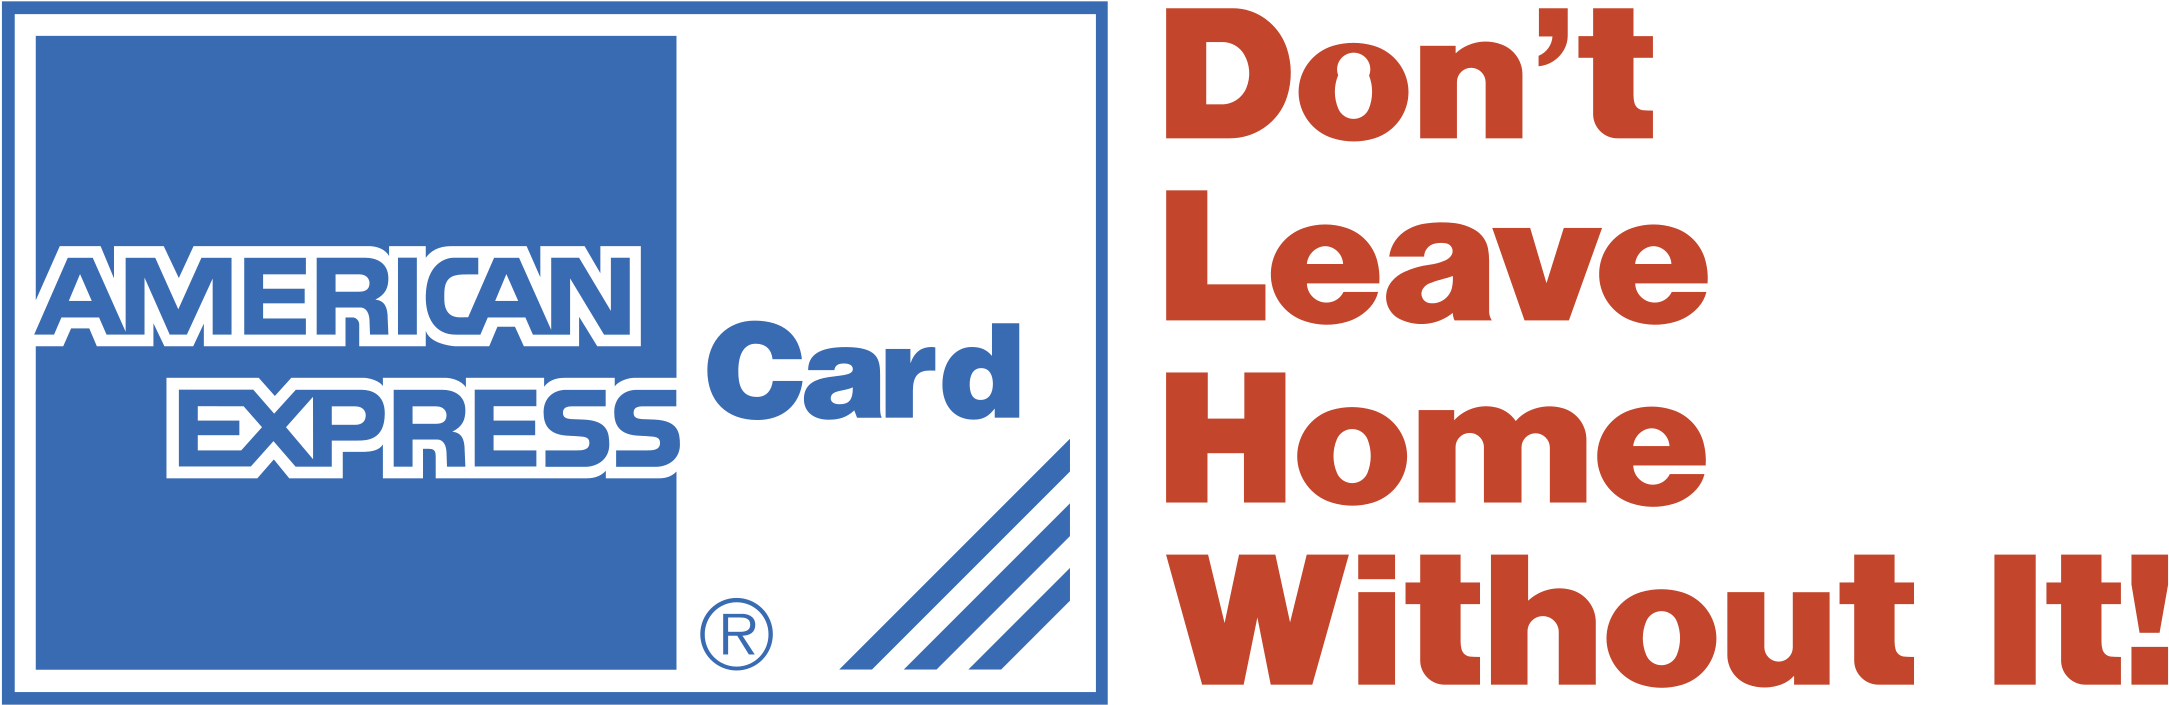 American Express Card Slogan PNG image